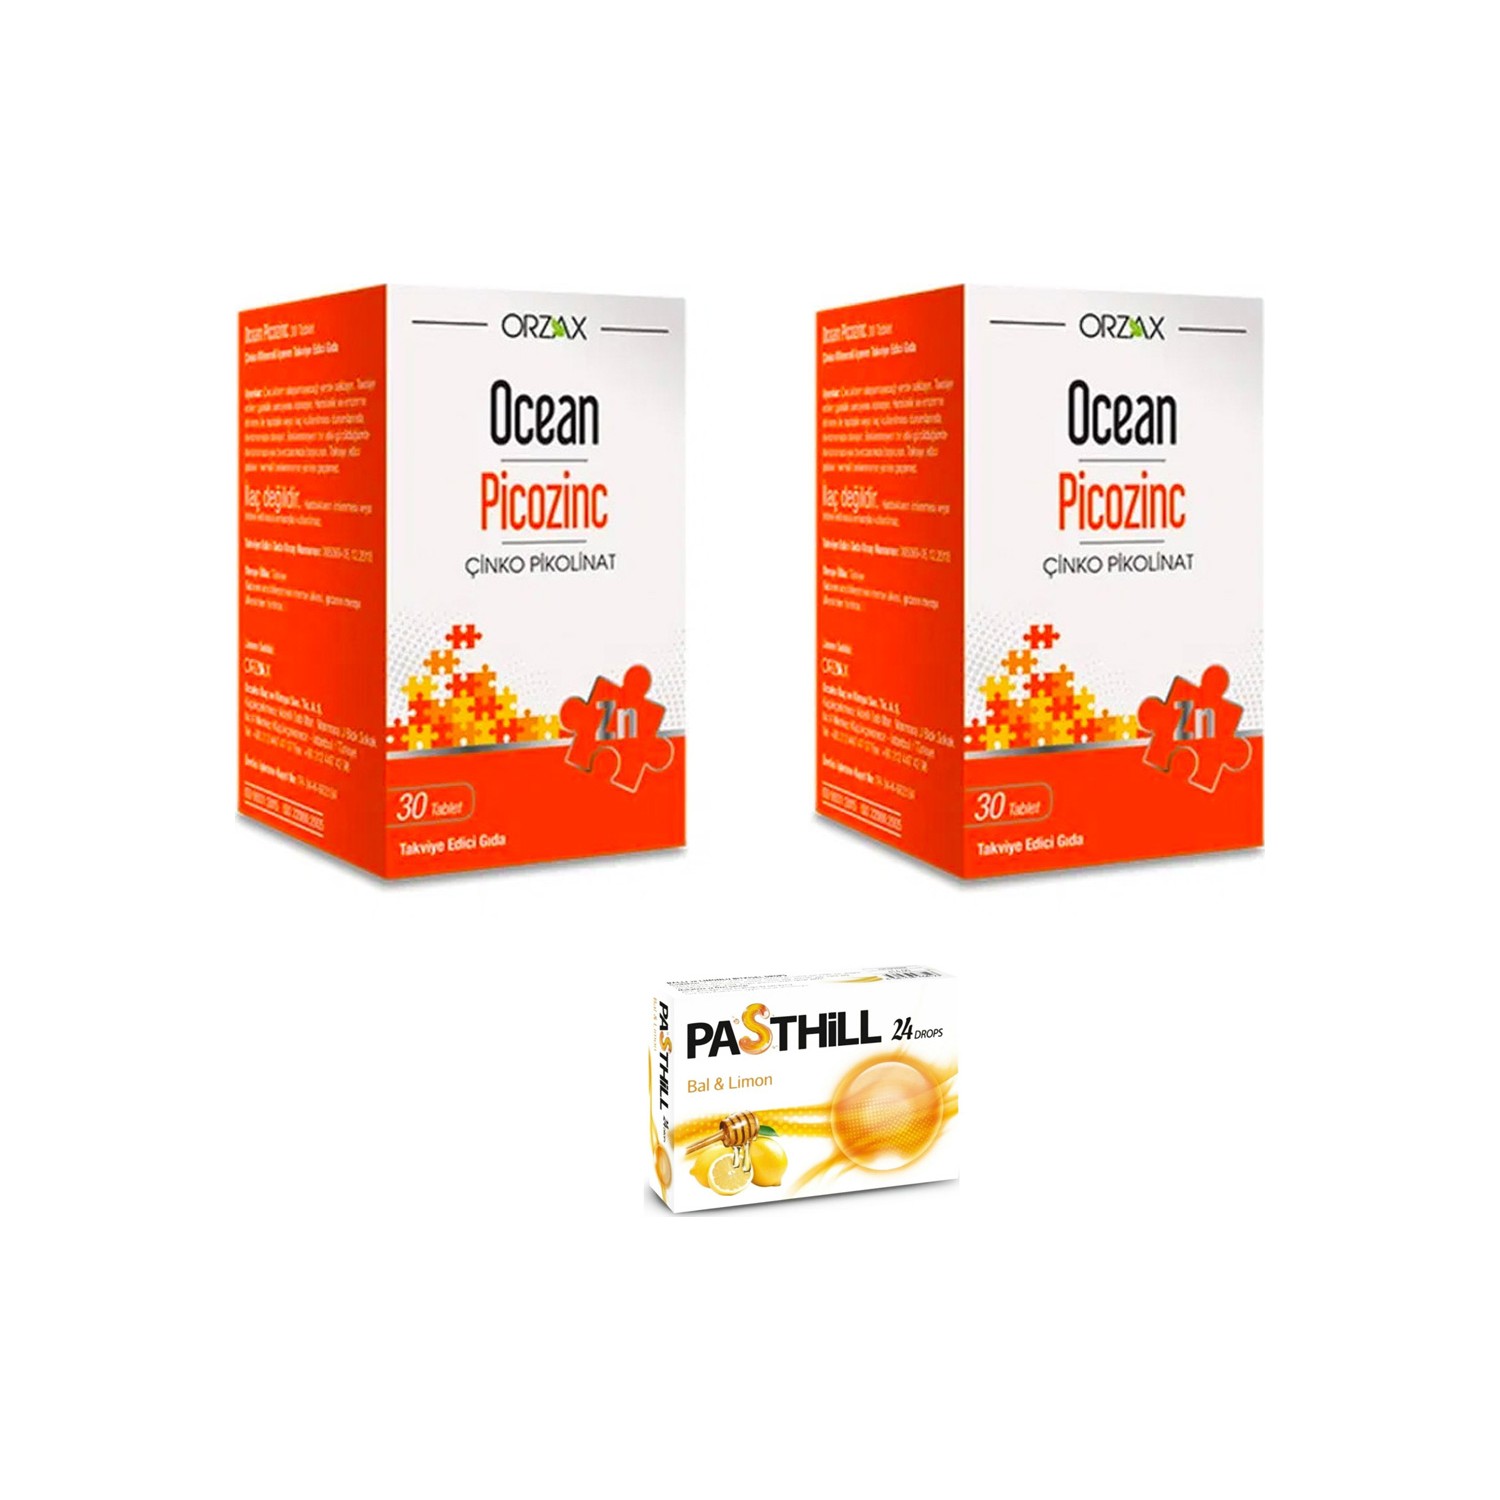 Пищевая добавка Orzax Ocean Picozinc Cinko Picolinate, 2 упаковки по 30 таблеток + Пастилки Pasthill со вкусом меда и лимона